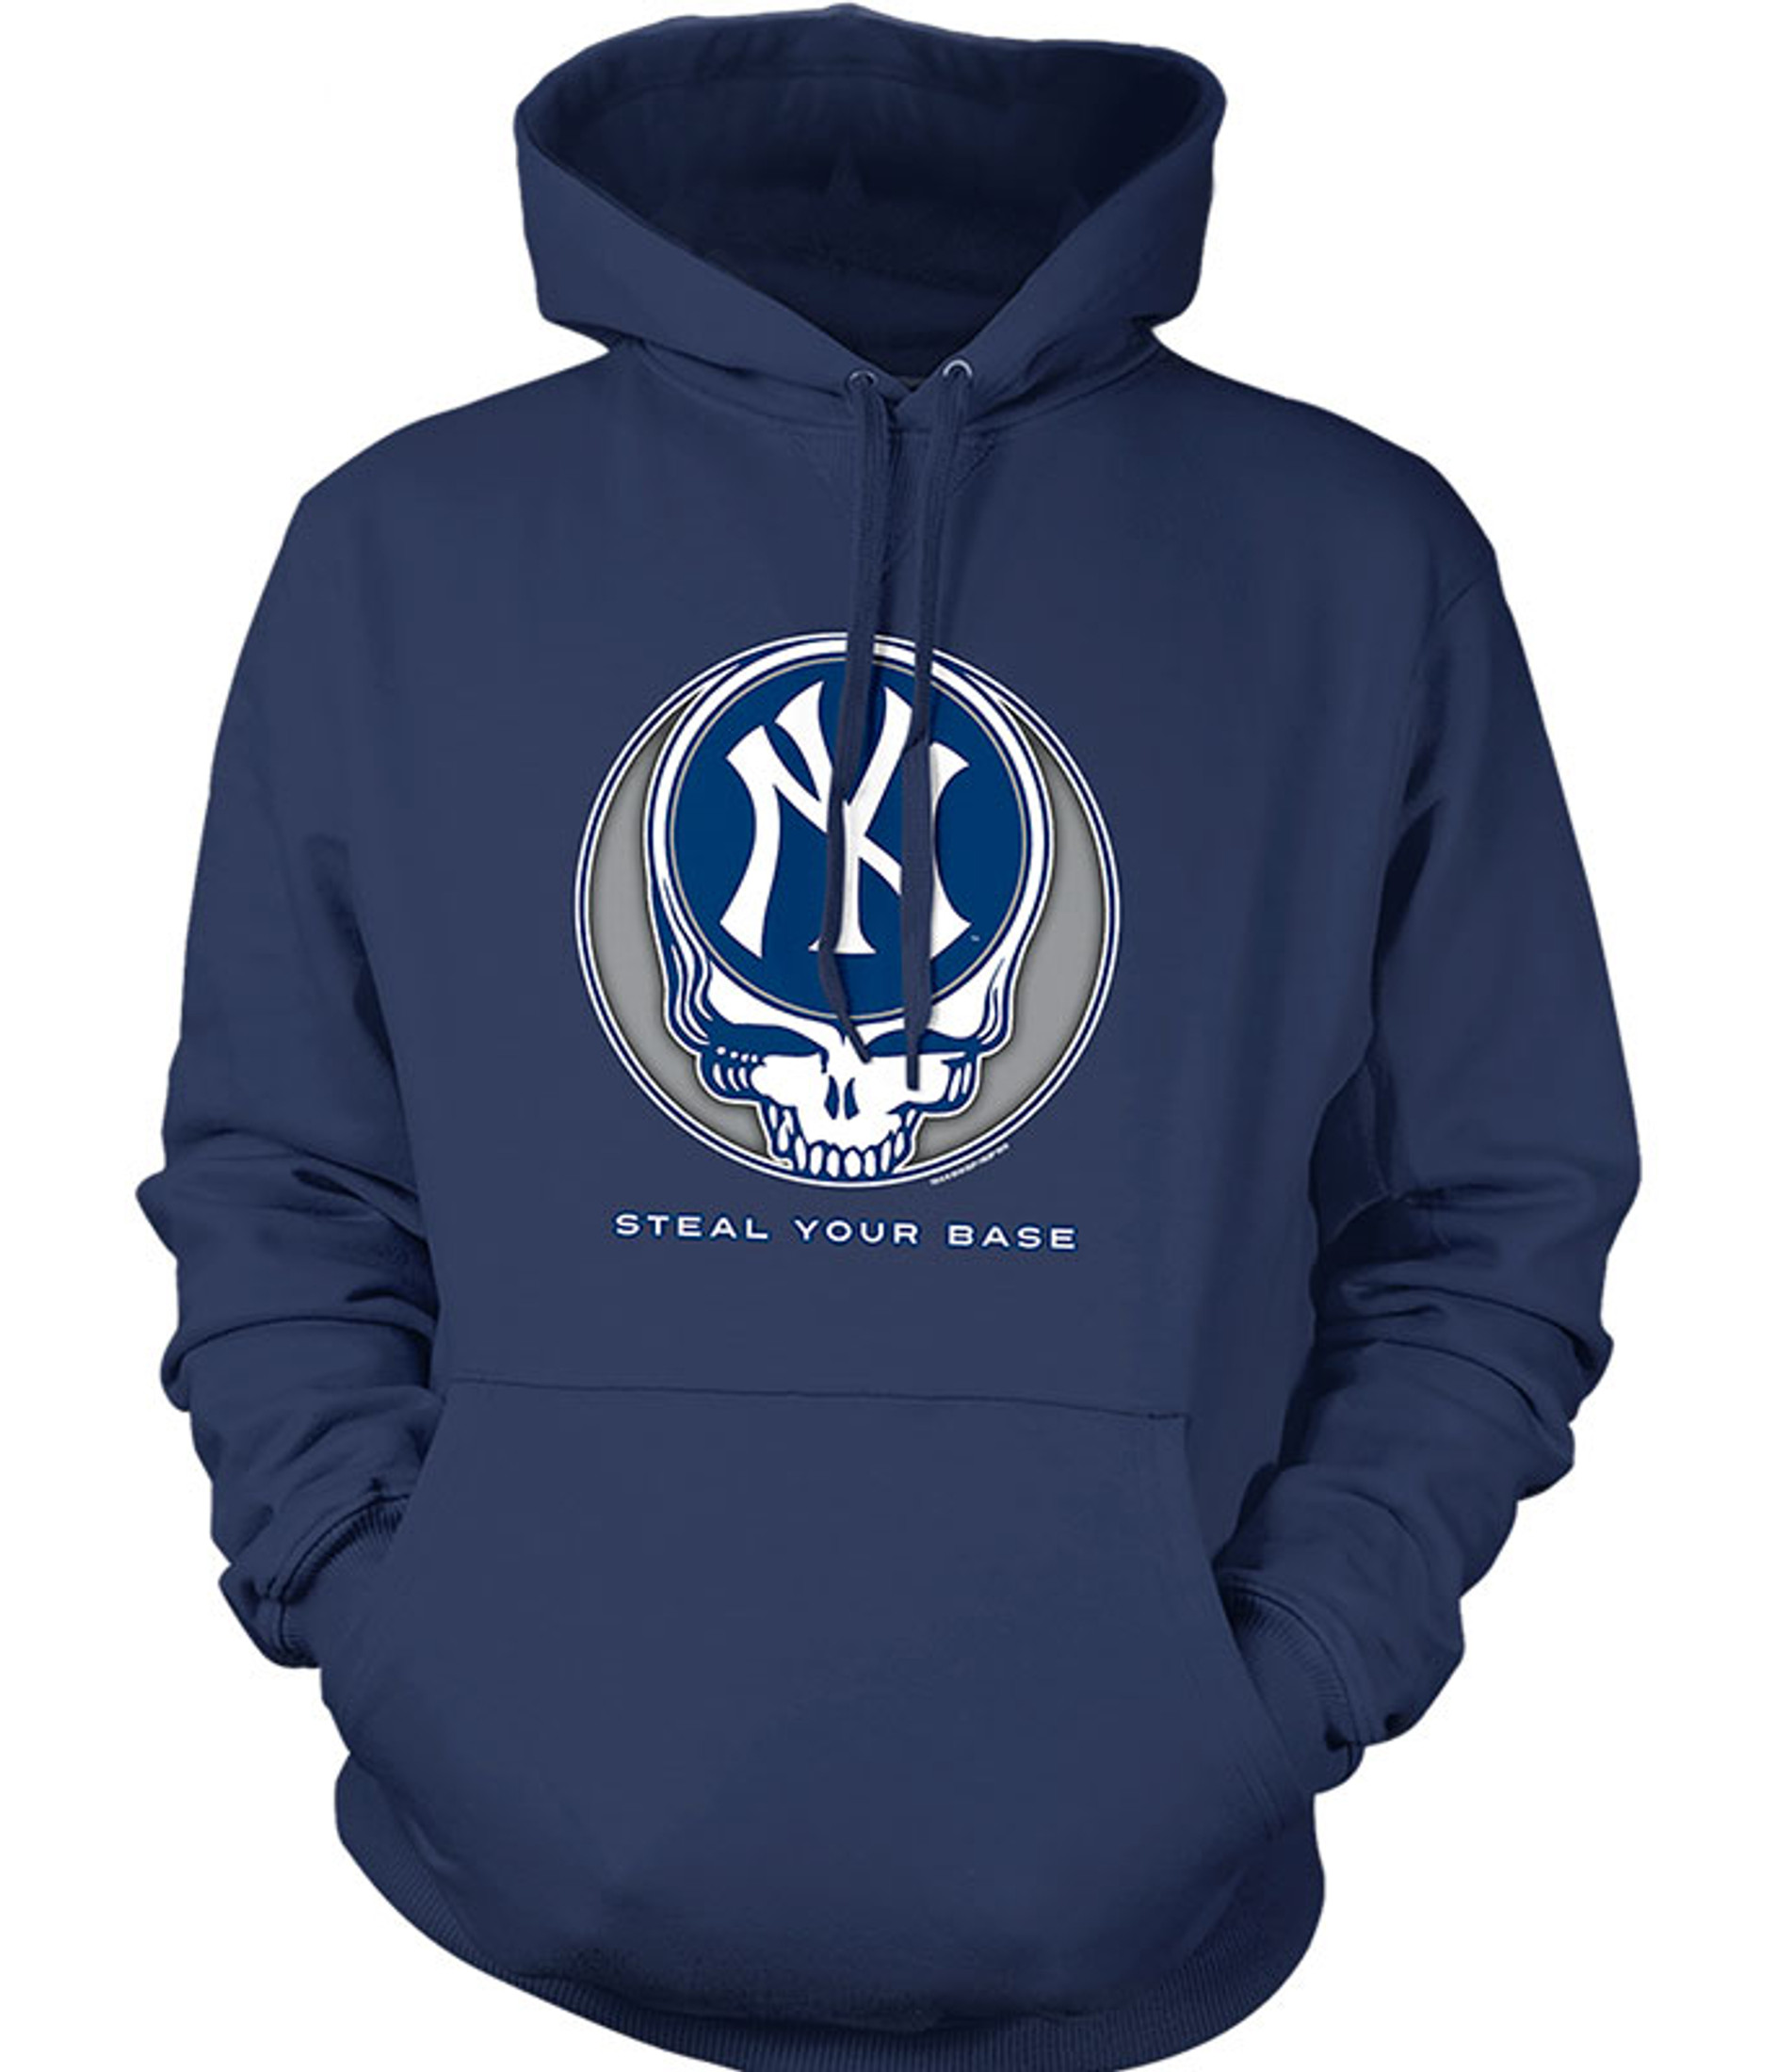 MLB New York Yankees GD Steal Your Base Navy Hoodie Liquid Blue